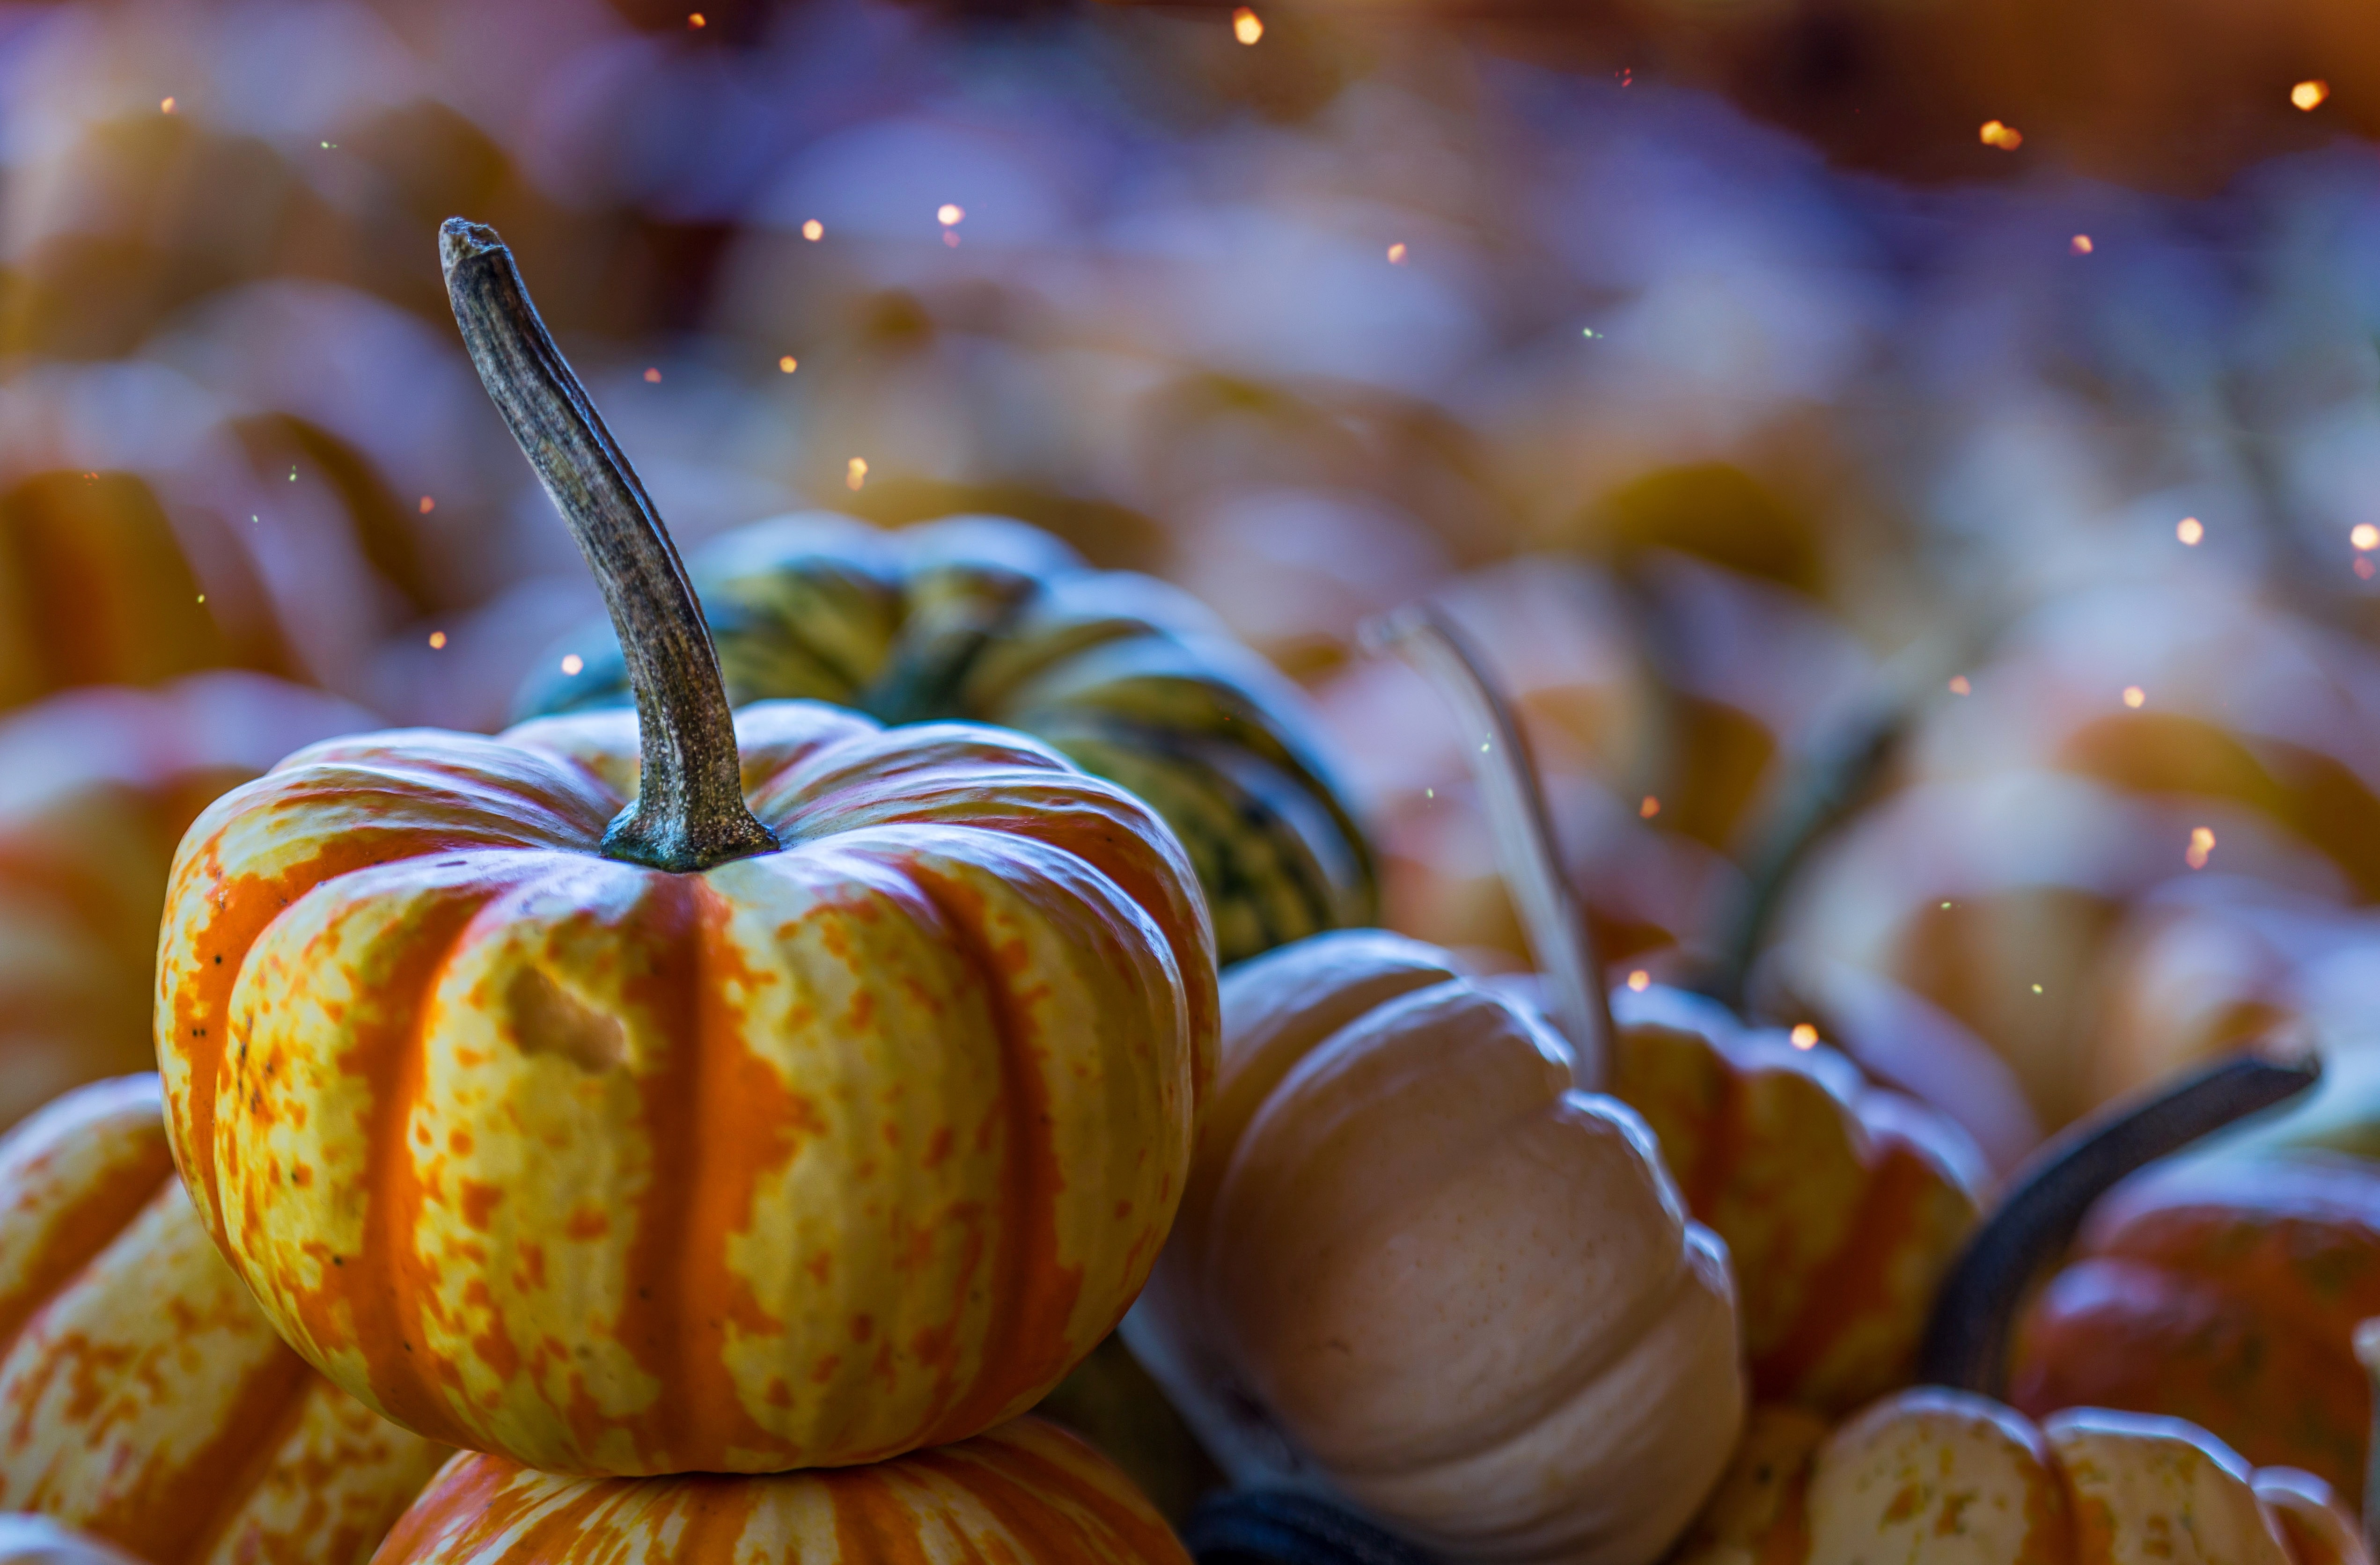 5084x3344 #gourd, #thanksgiving, #herbst, #vegetable, #light leak, #orange, #pumpkin, #light flare, #closeup, #magical, #stem, #fall, #season, #autumn, #light, #fairy light, #harvest, #PNG image, #bokeh, #wallpaper, #magic. Mocah.org HD